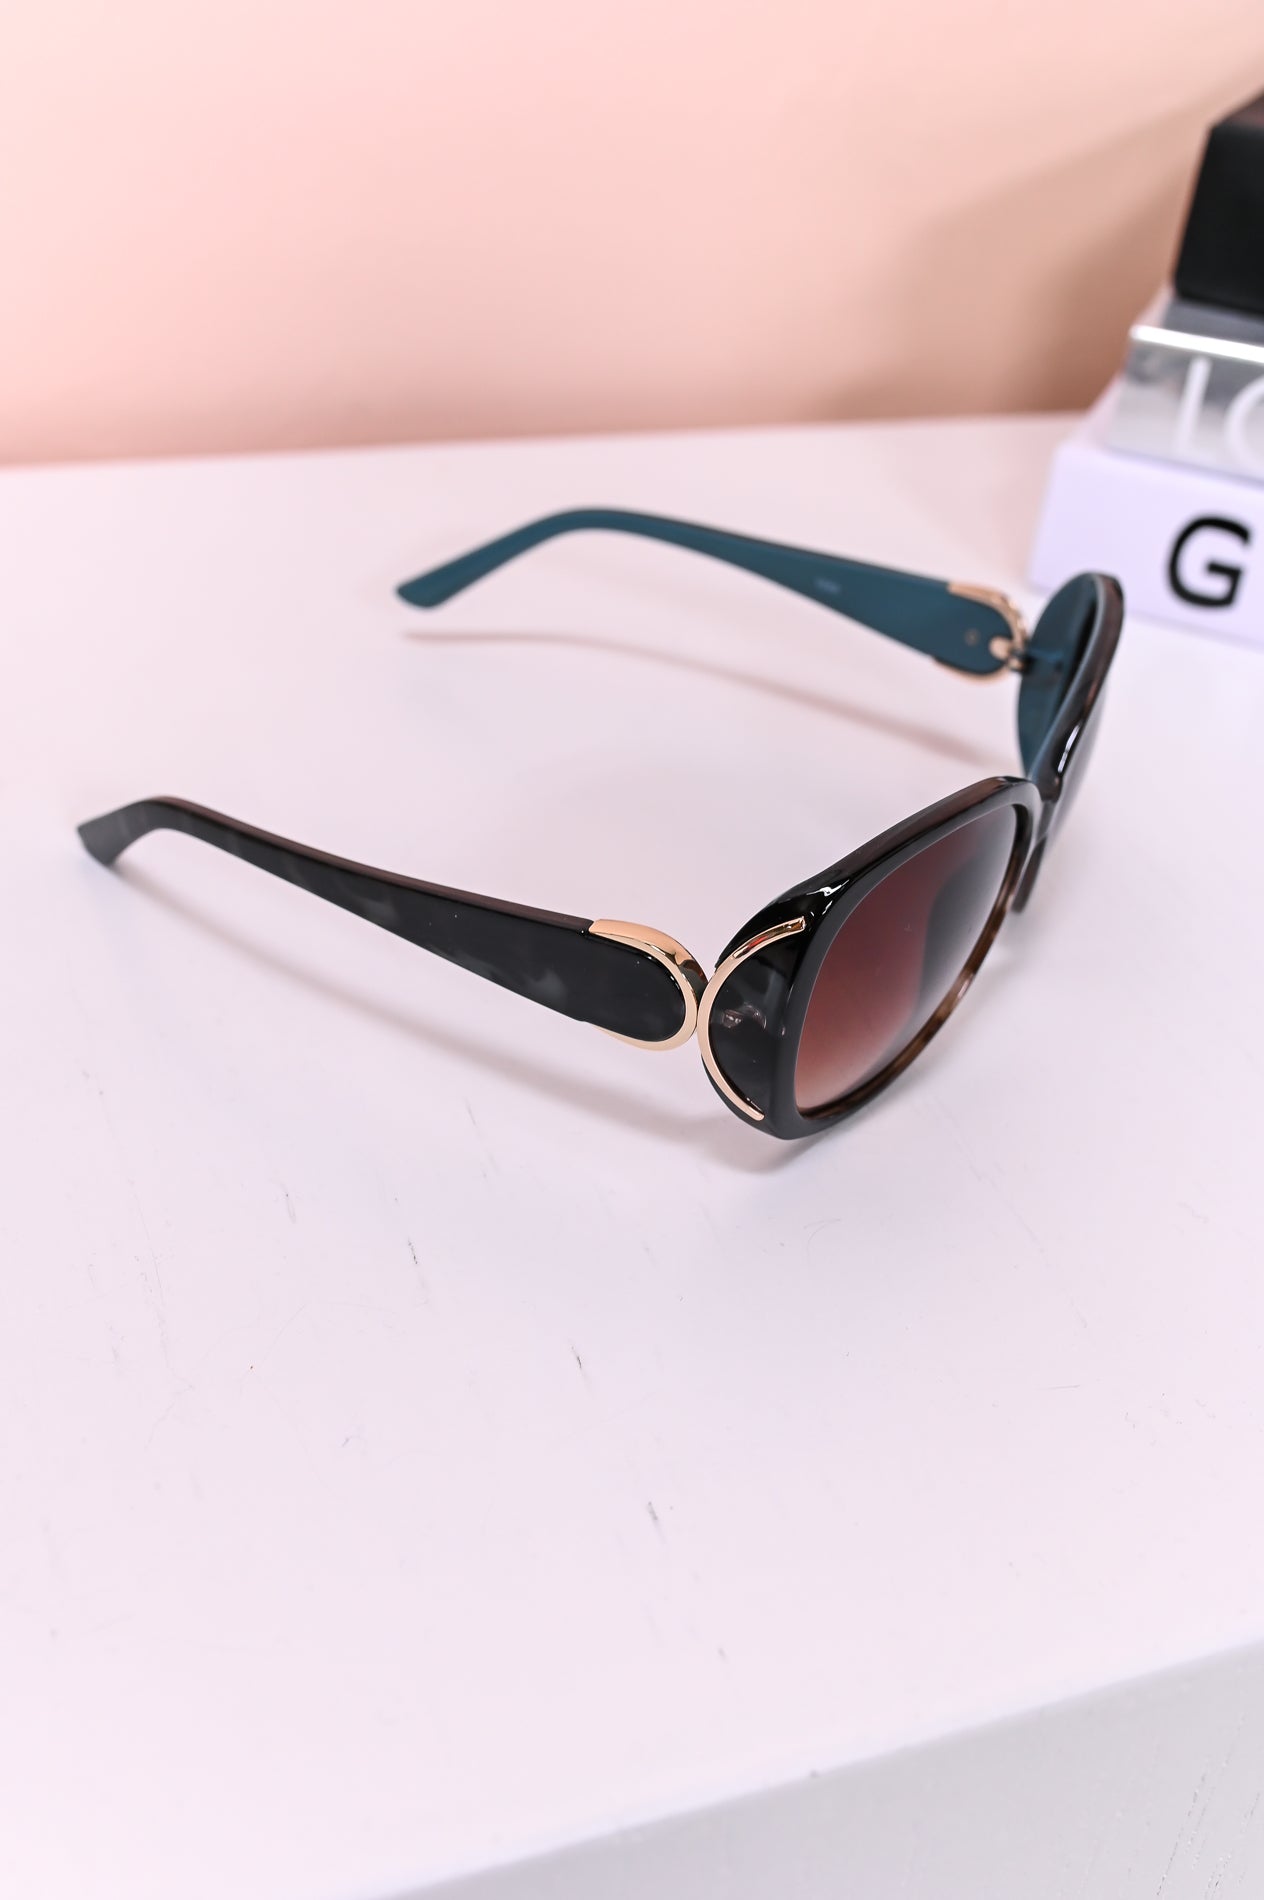 Blue/Black Printed Frame/Brown Lens Sunglasses - SGL324BL